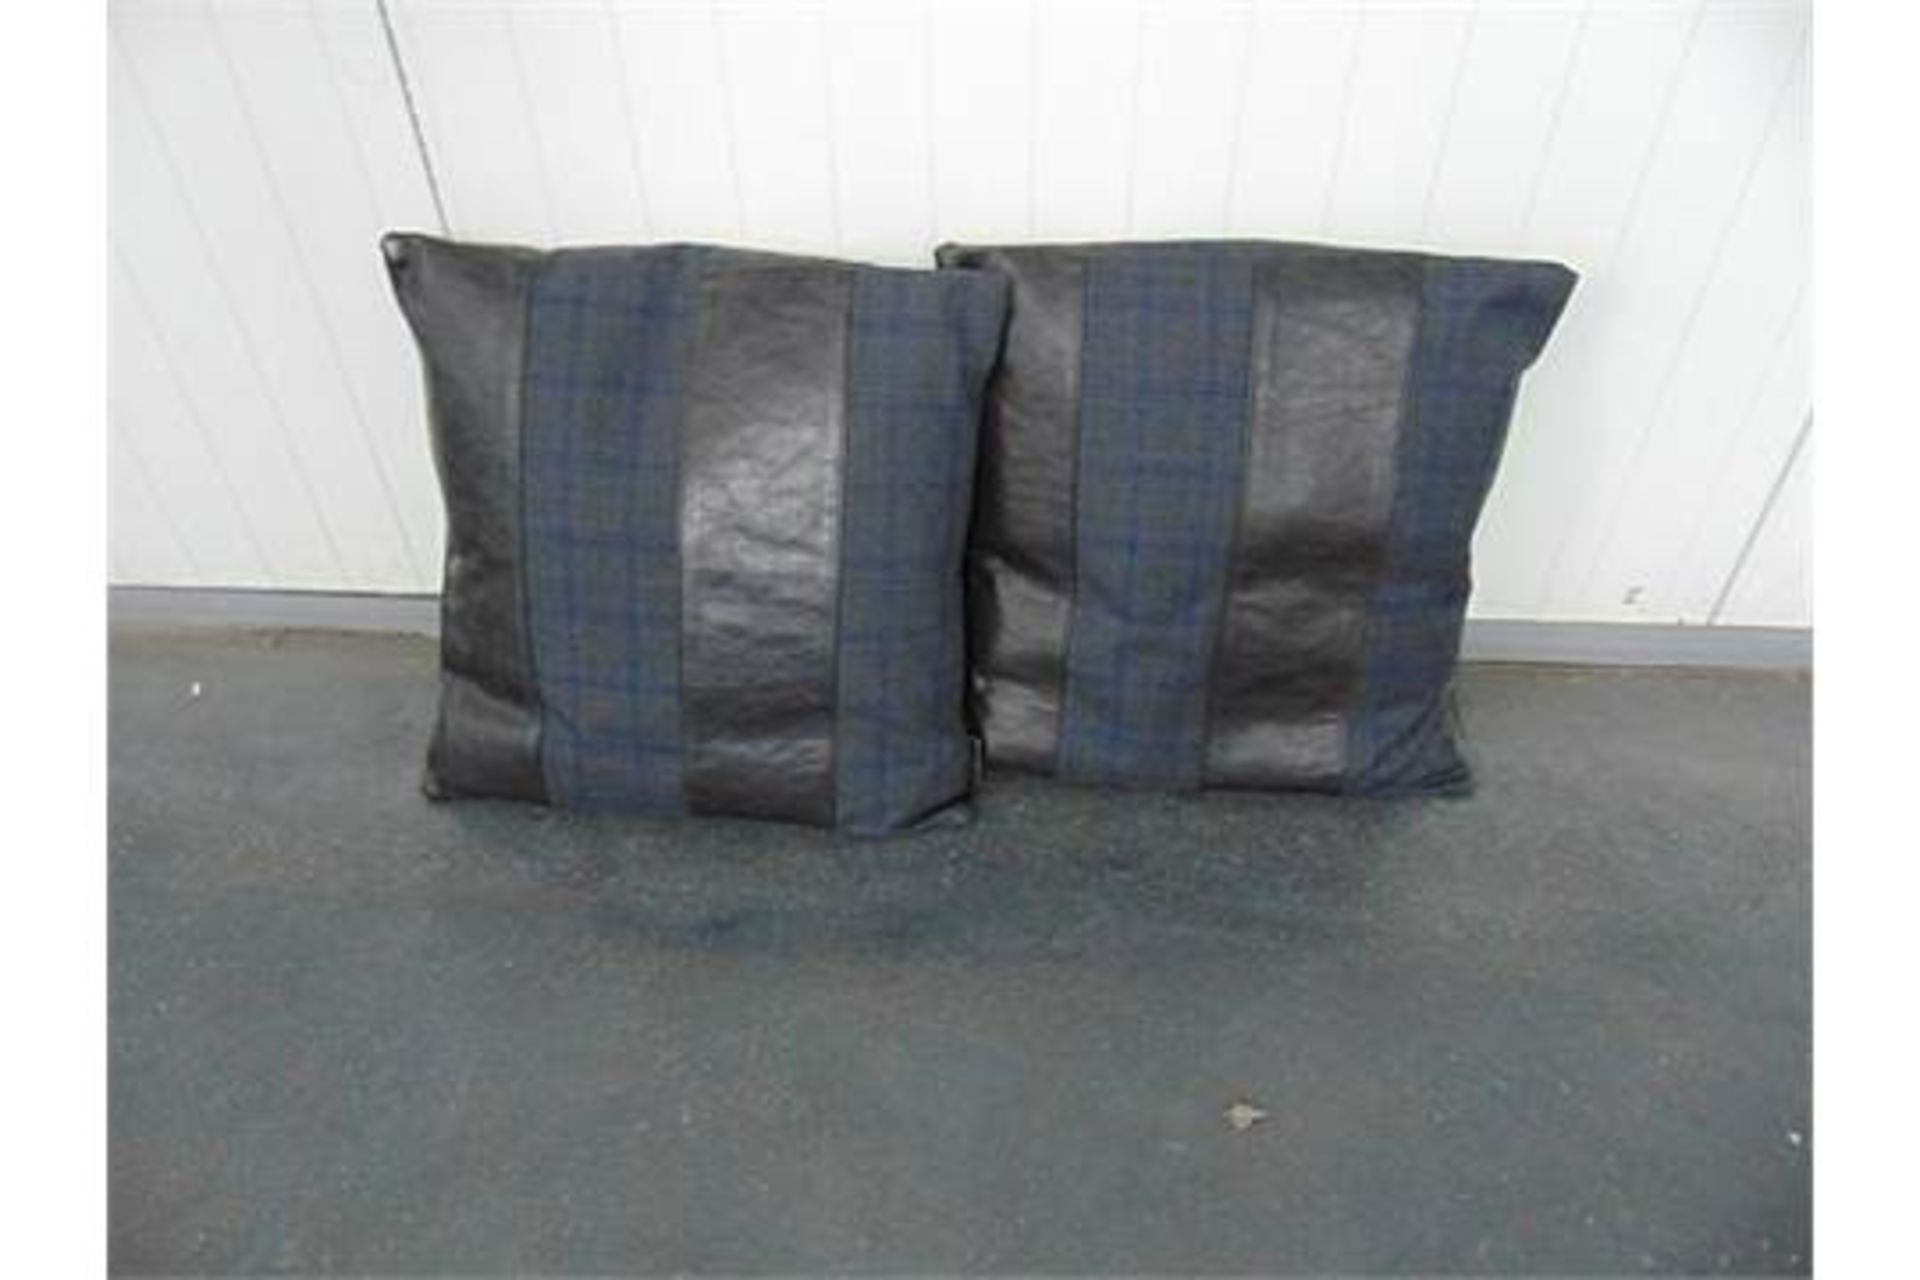 Pillow Chancellor - Grey Blue Checker & Black Leather 50 x 50 x 15cm